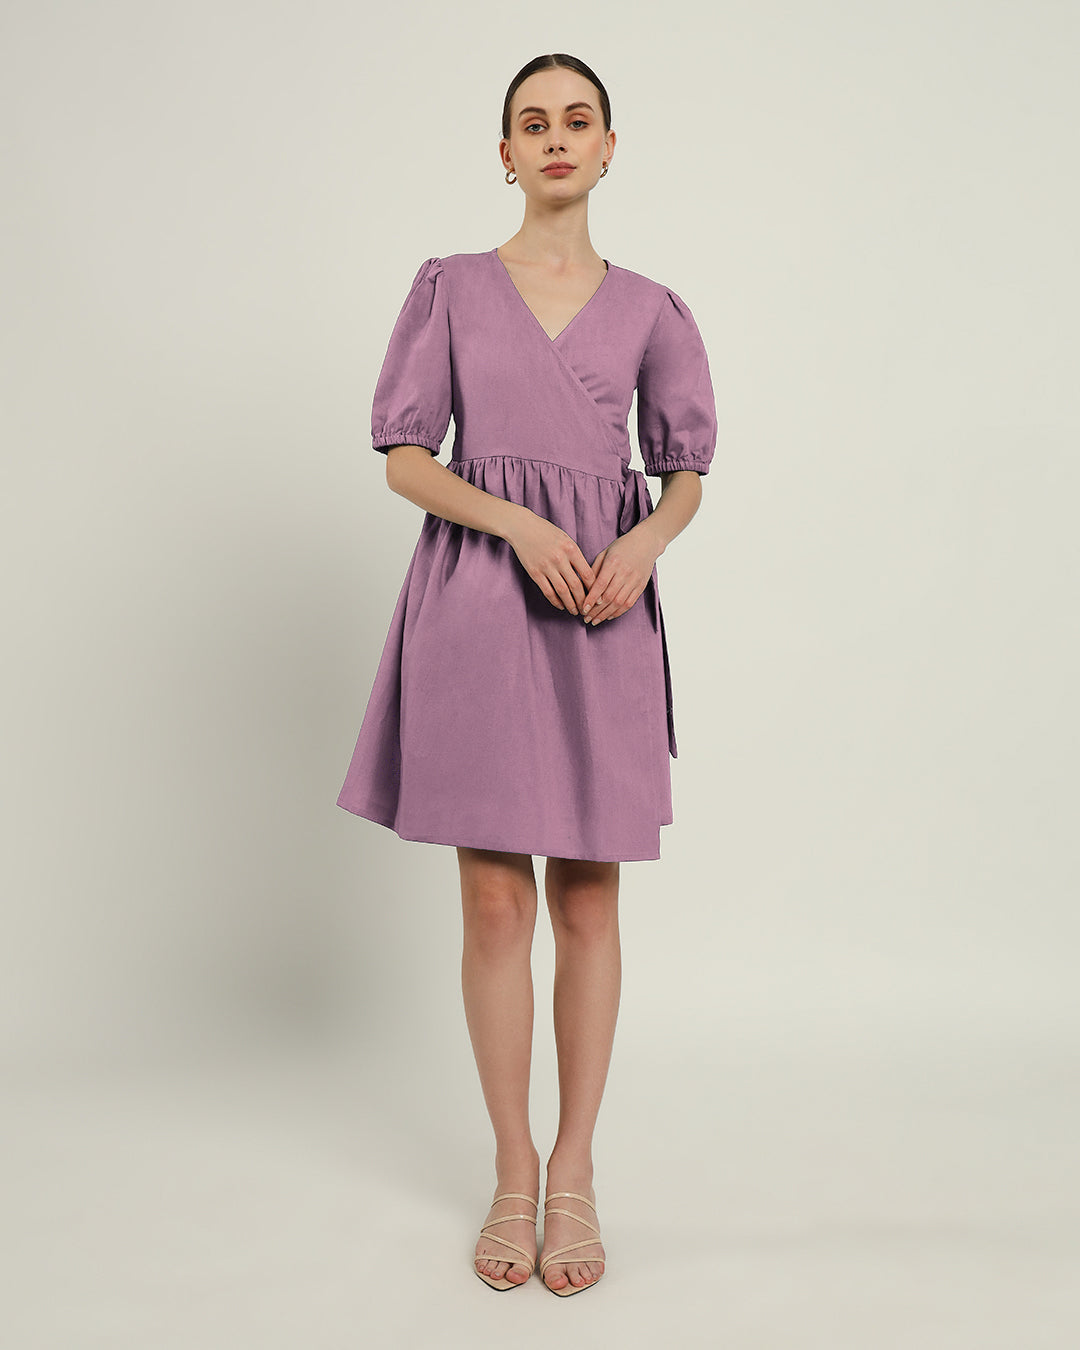 The Inzai Purple Swirl Cotton Dress